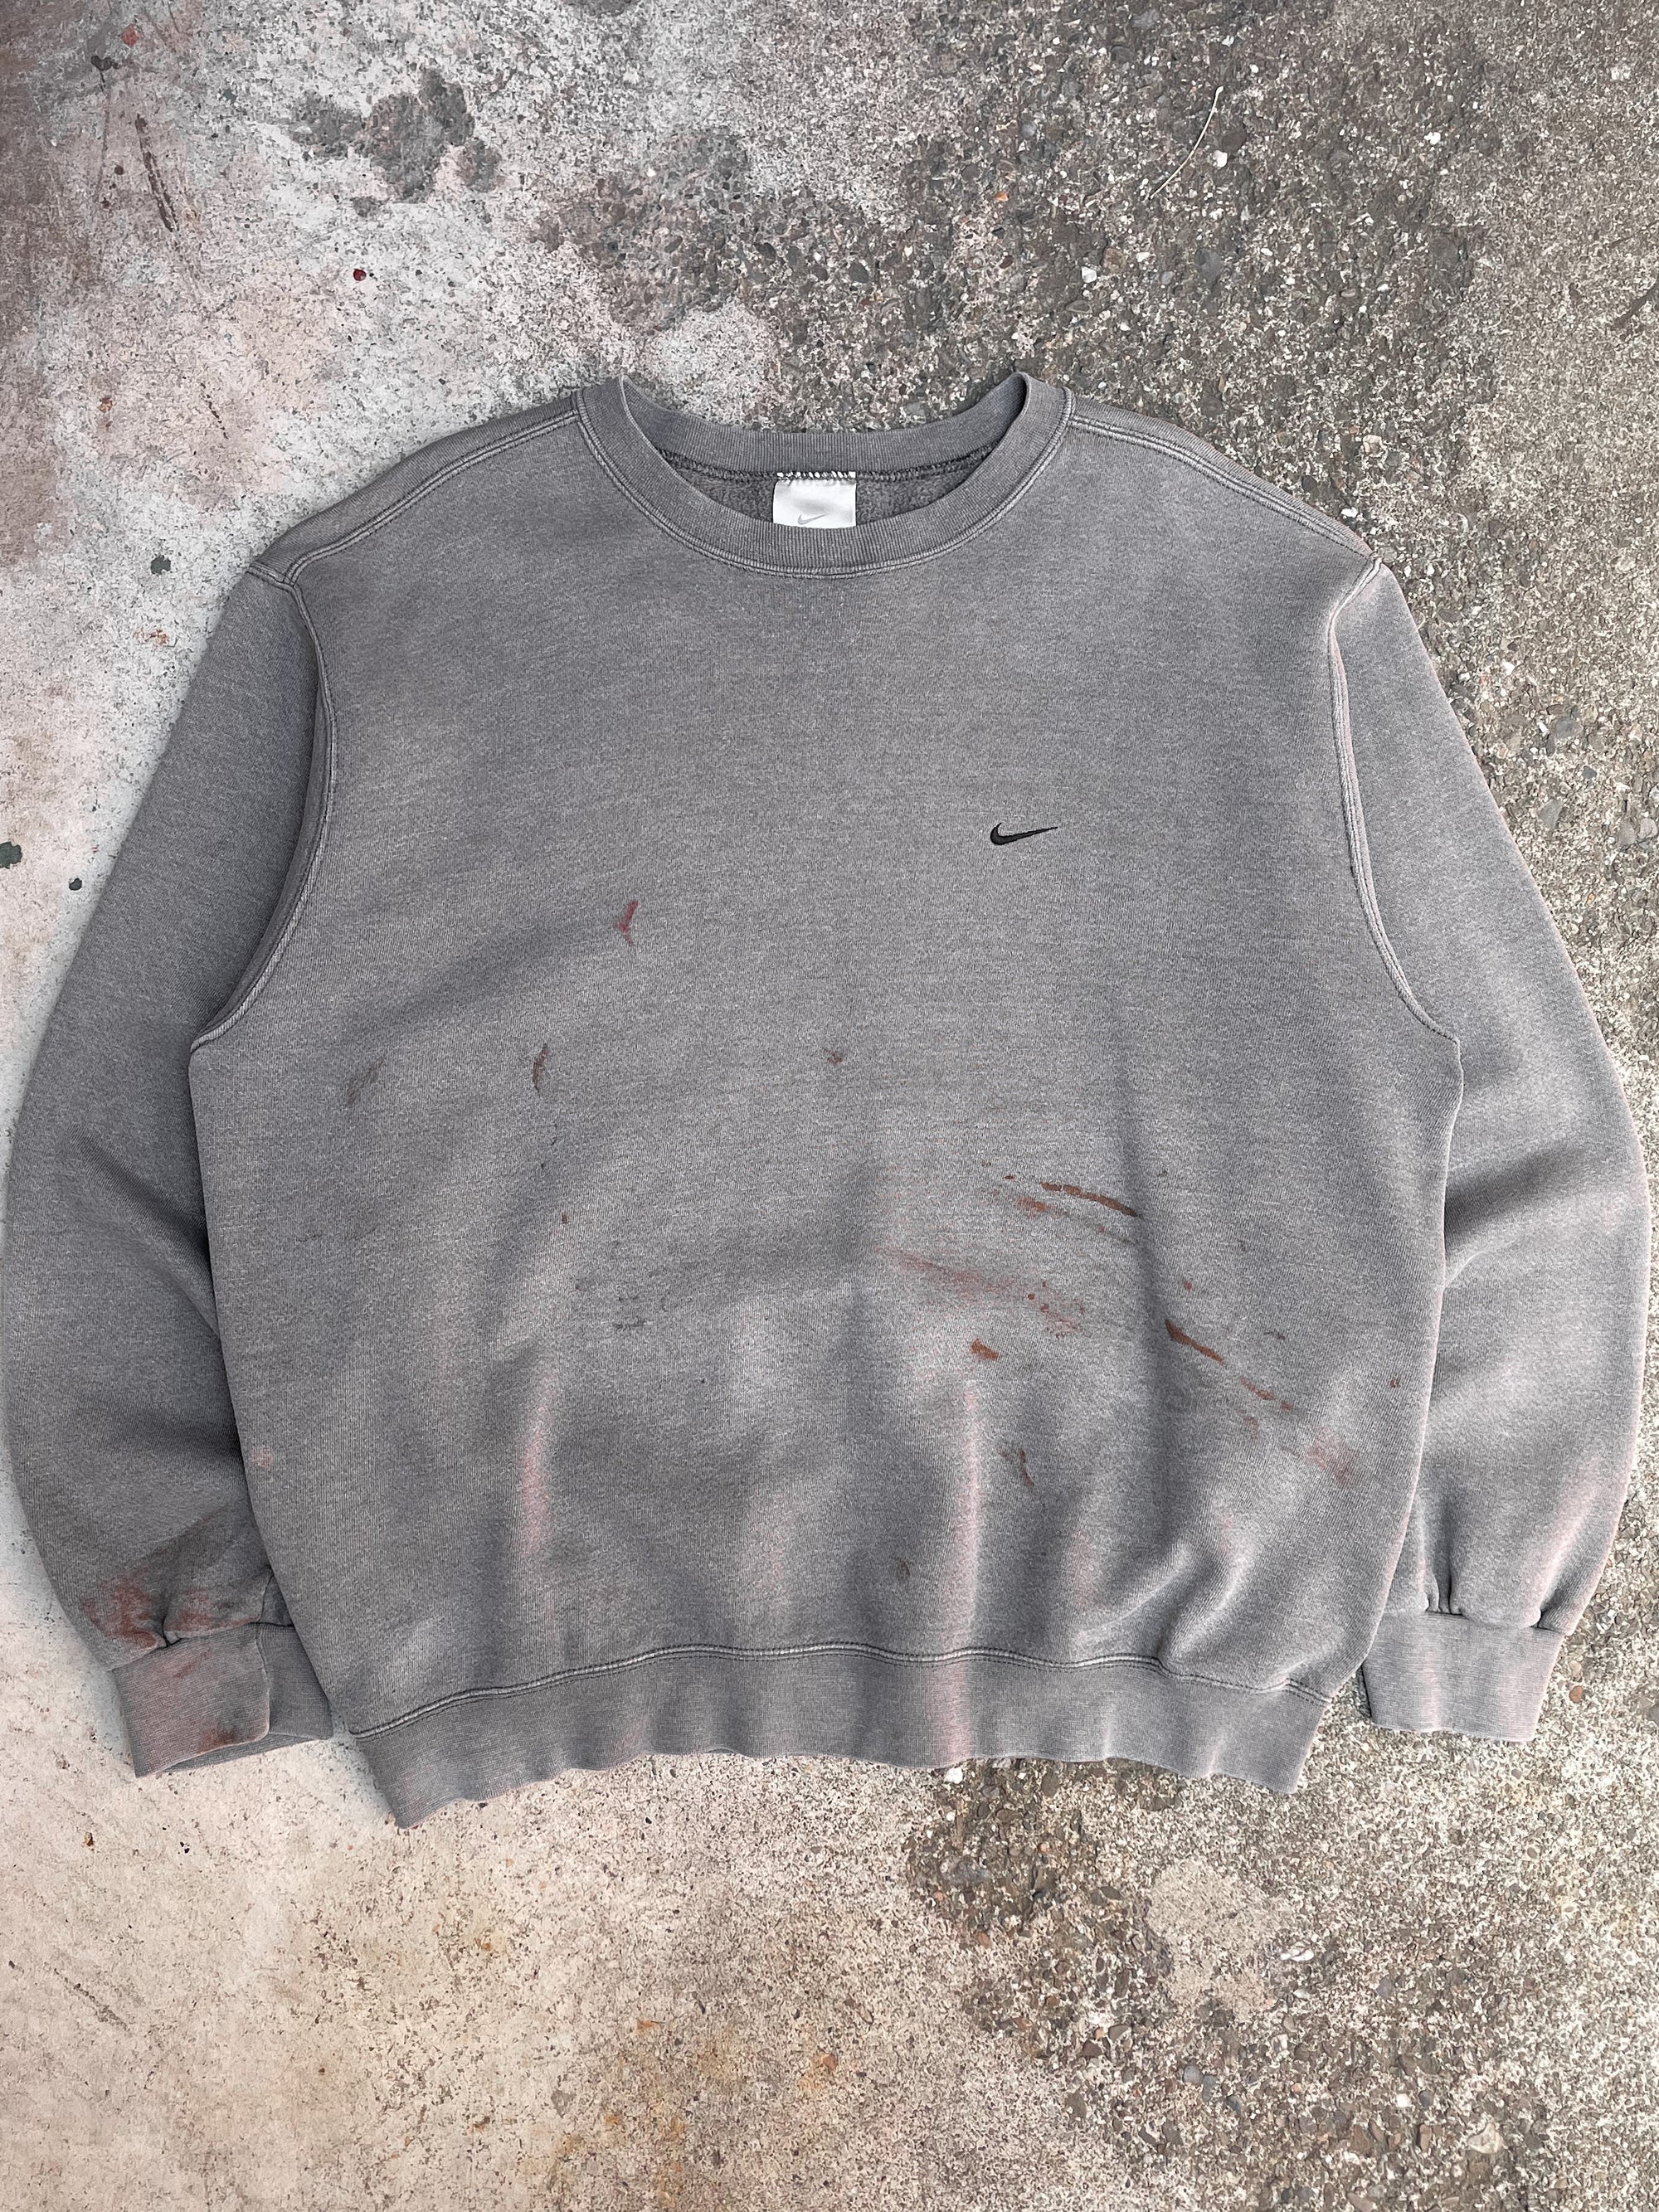 2000s Nike Painted Grey Sweatshirt (L/XL)